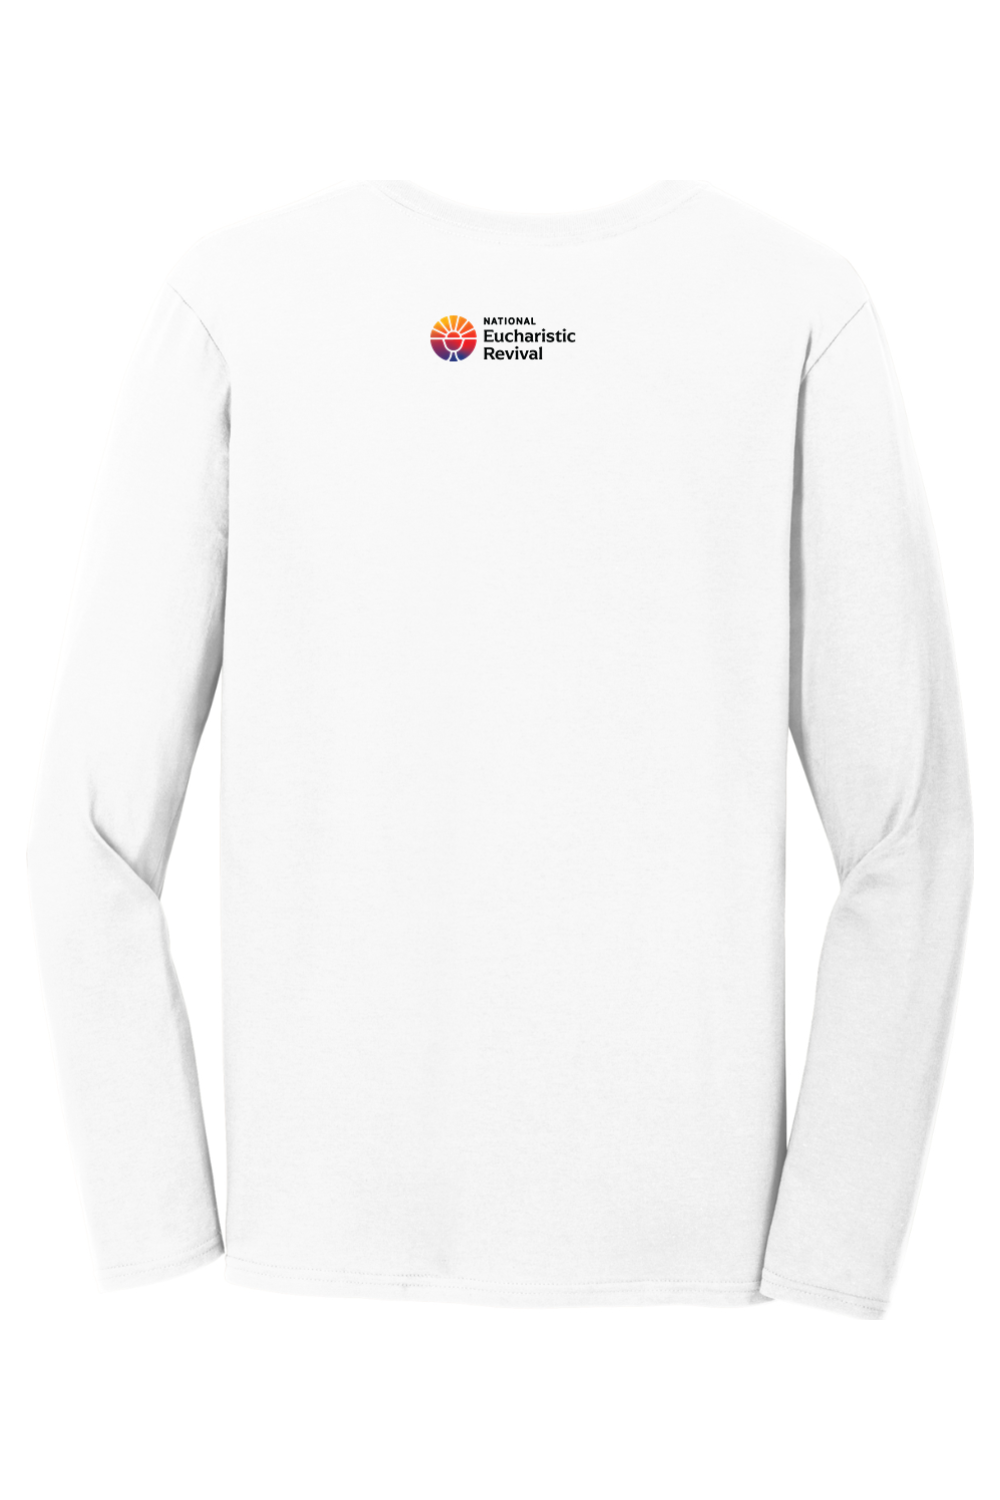 Retro Revival Long Sleeve T-Shirt - english